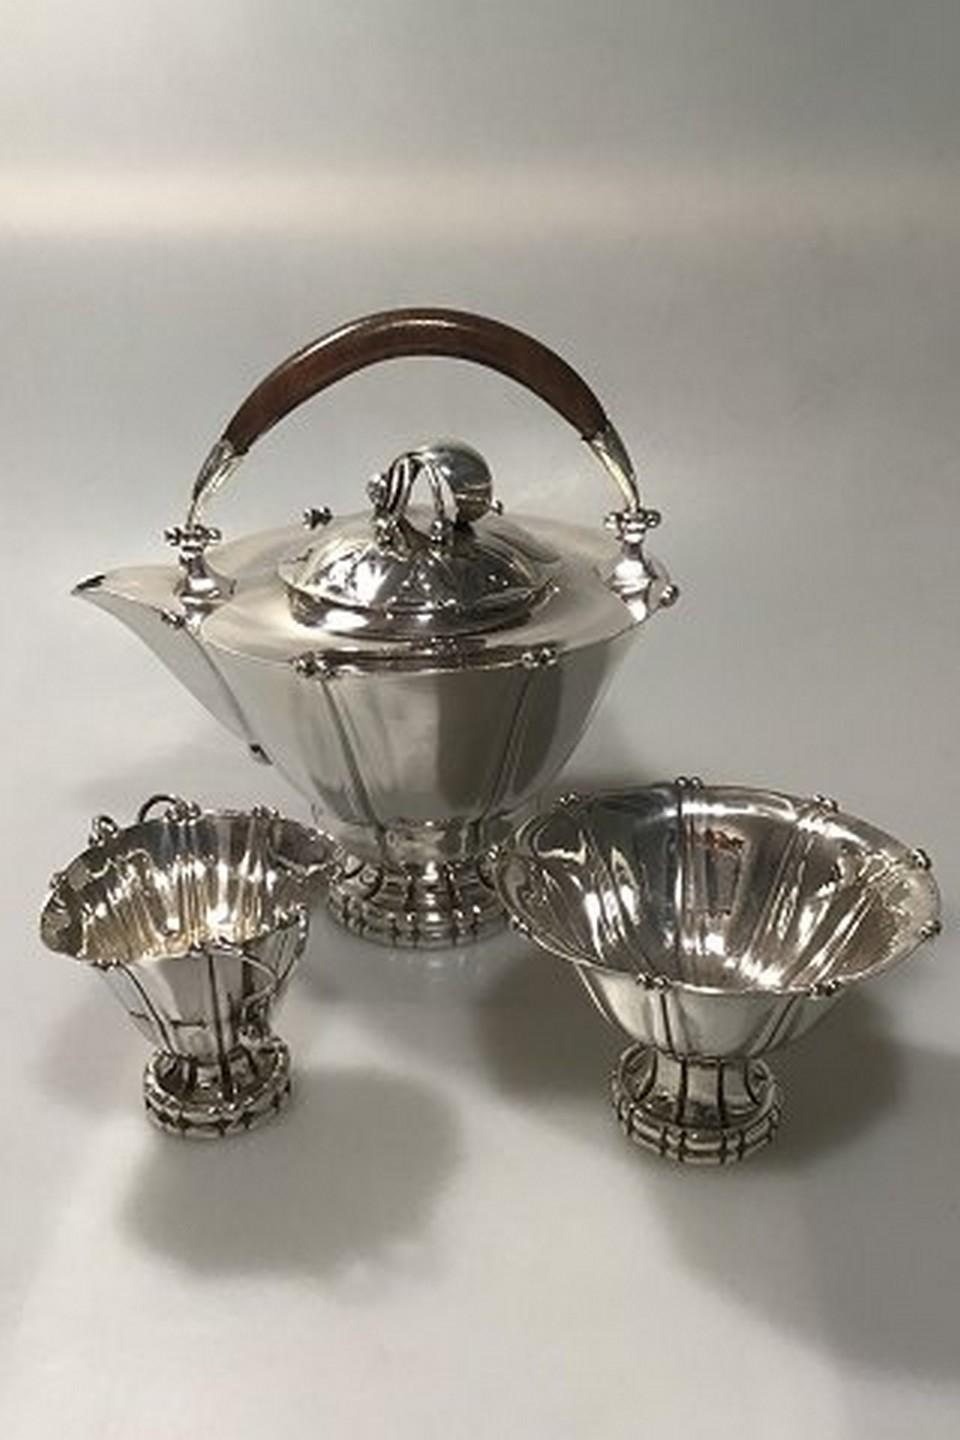 Georg Jensen silver/sterling silver tea set no. 4
Creamer no 4 (1915-1927) measures 8 cm (3 5/32 in) weight 96.9 gr/3.42 oz
Sugar bowl no 4 measures: height 8 cm (3 5/32 in) diameter 12 cm (4 23/32 in) weight 136.8 gr/ 4.83 oz
Tea pot no 4C.